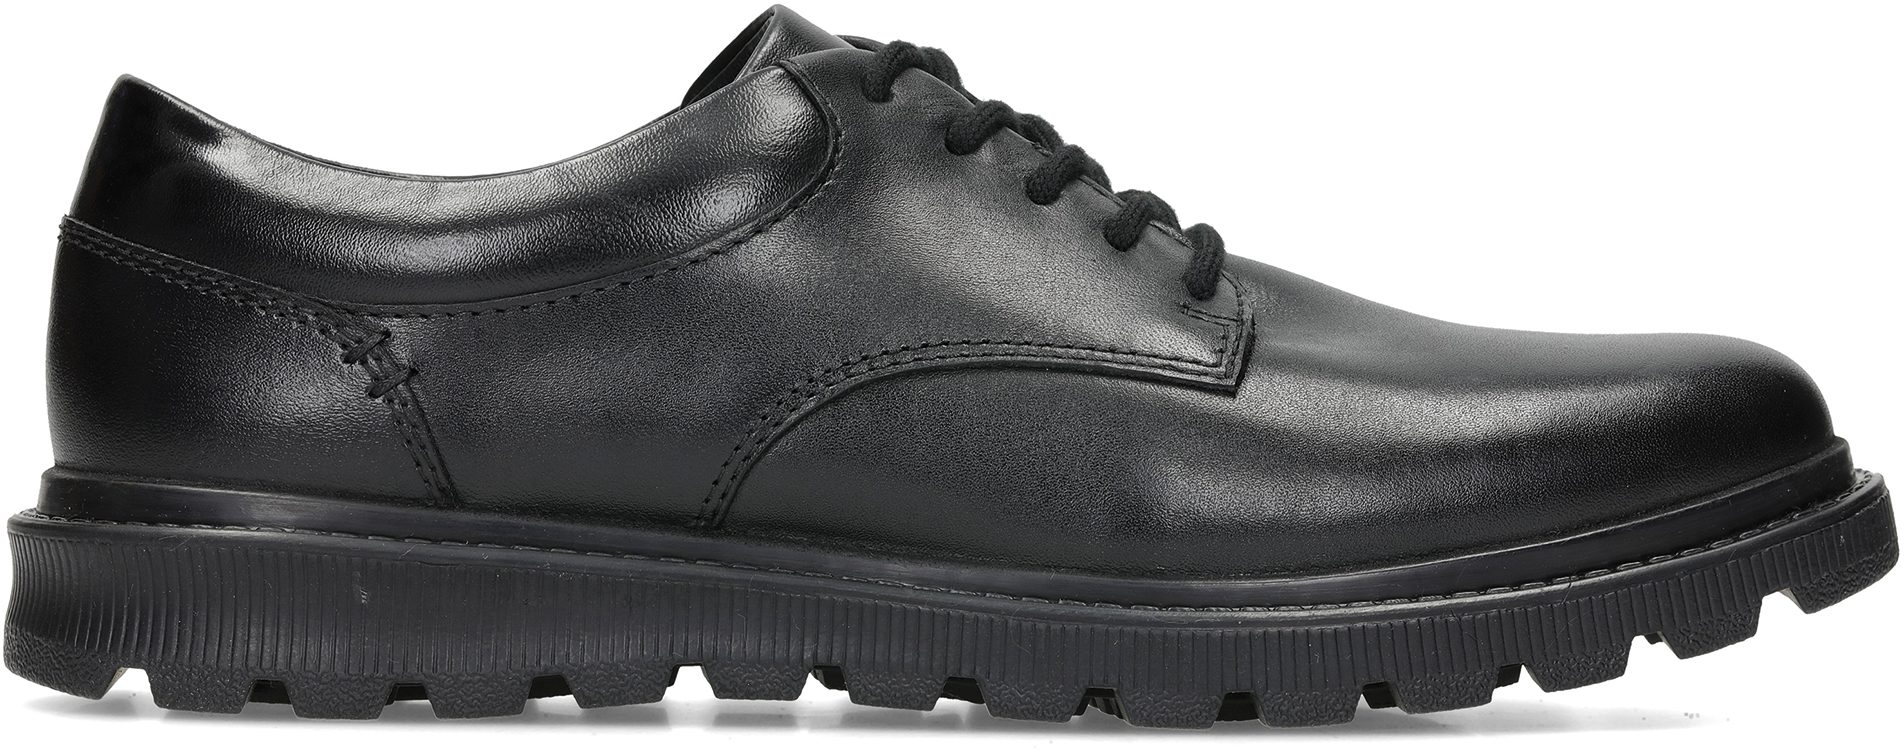 Clarks Mayes Trek BL Black Leather 26126831 - Boys School Shoes ...